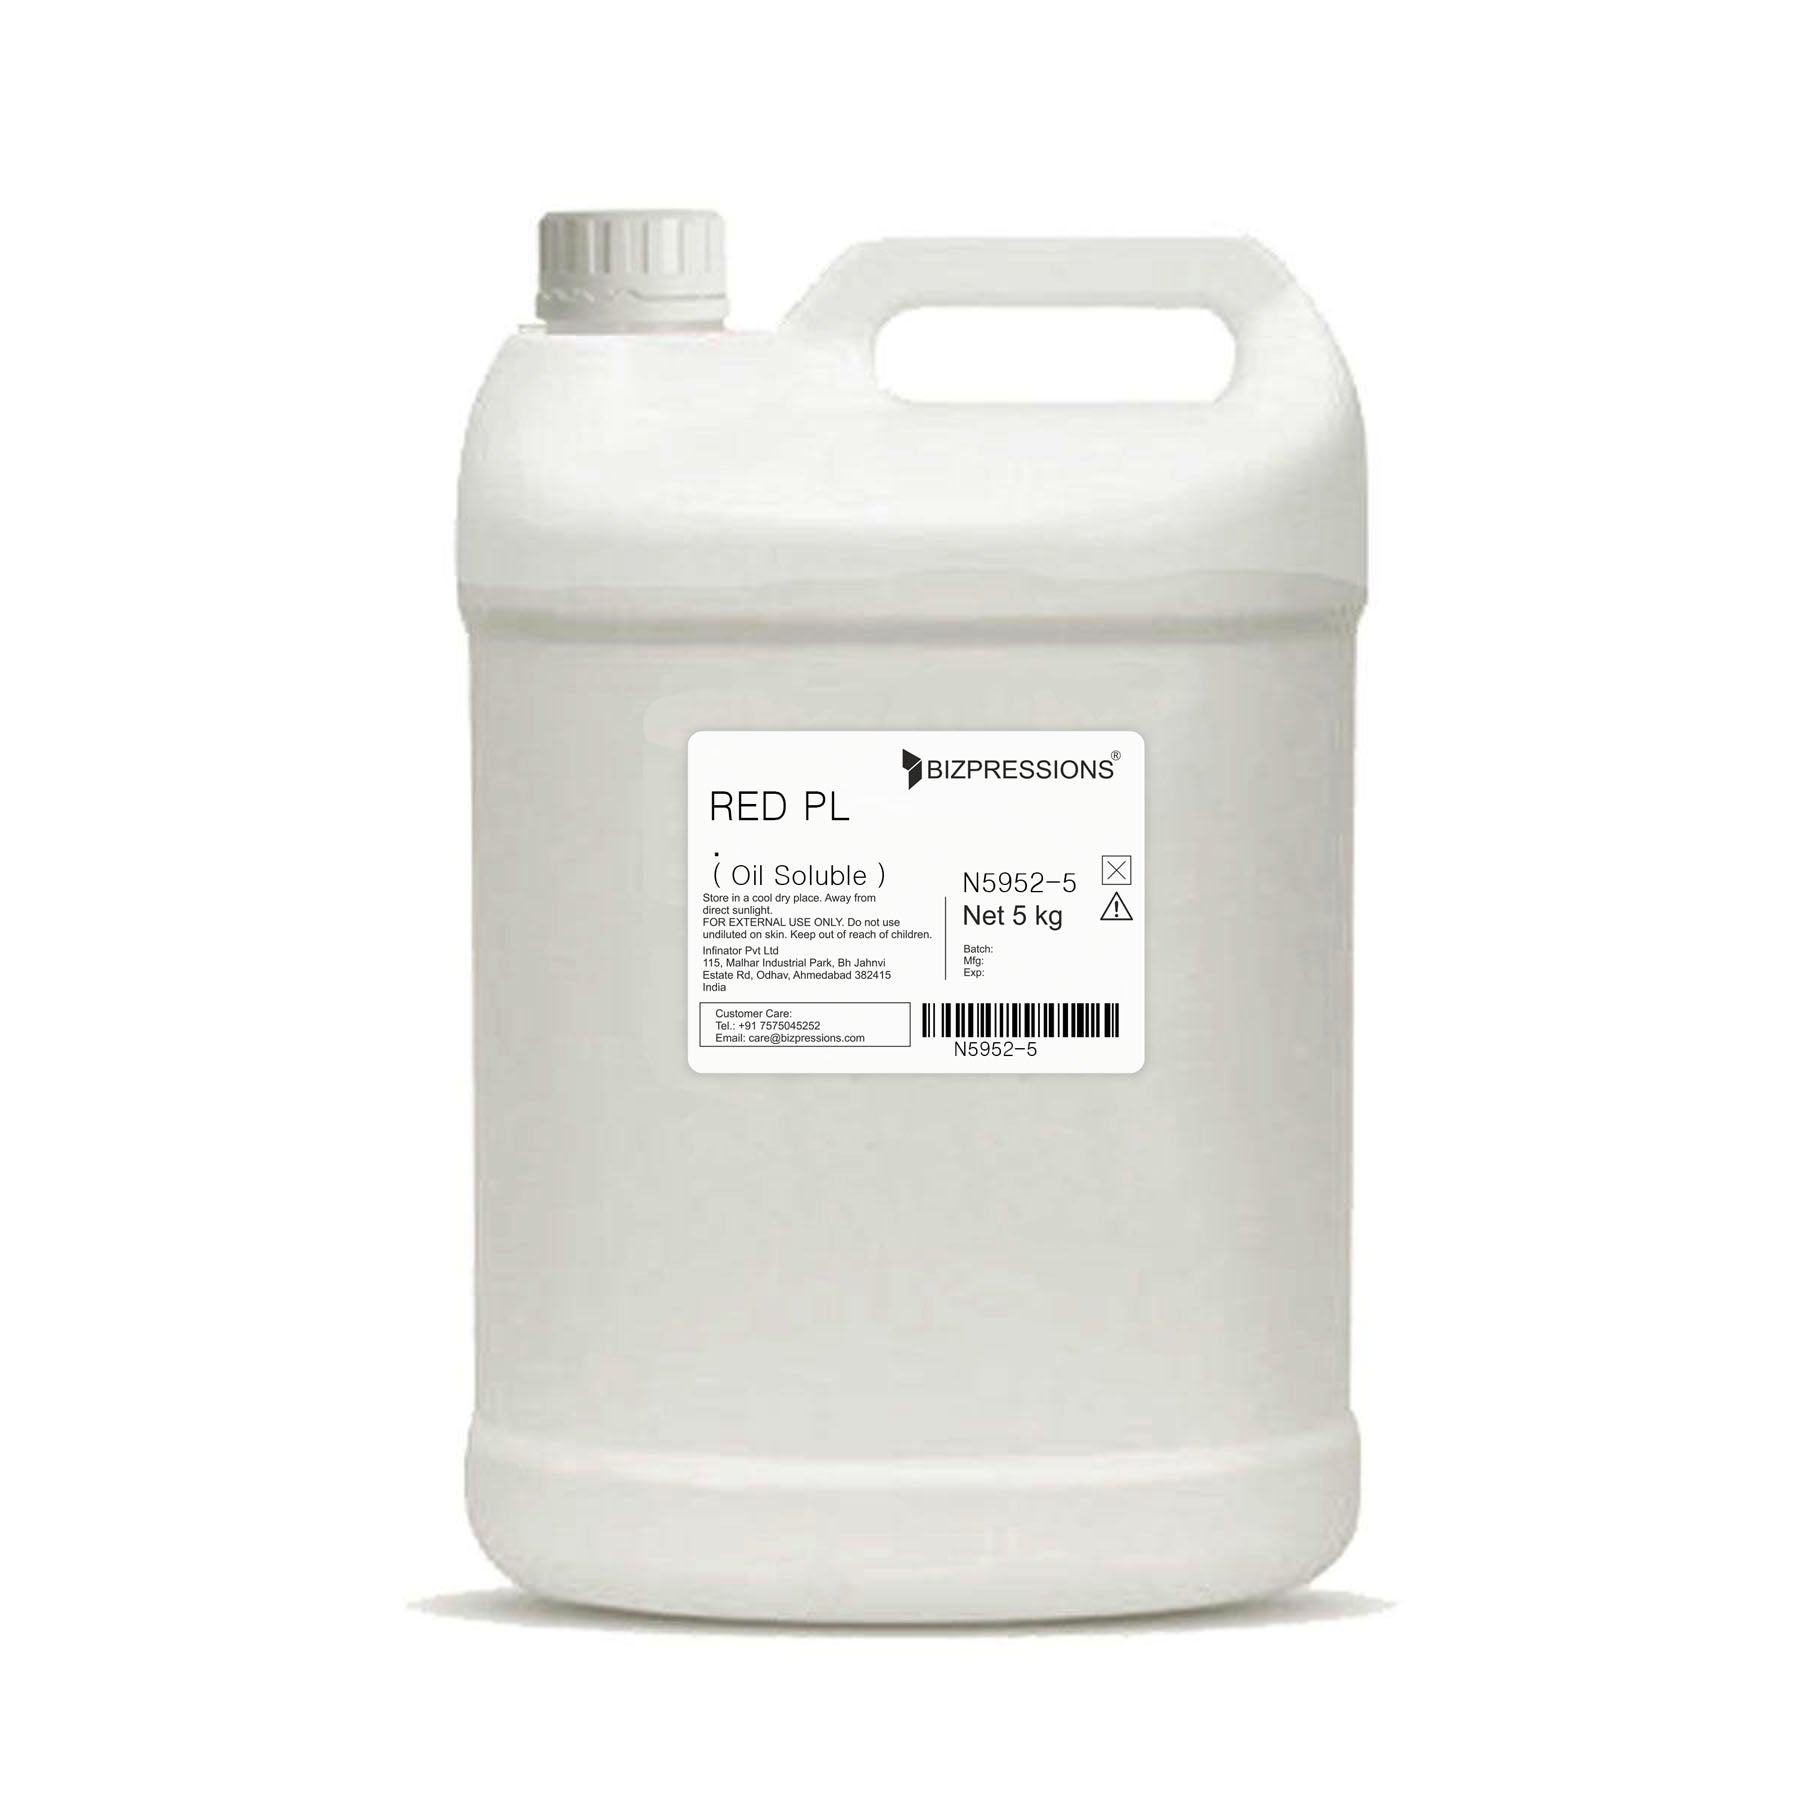 RED PL - Fragrance ( Oil Soluble ) - 5 kg